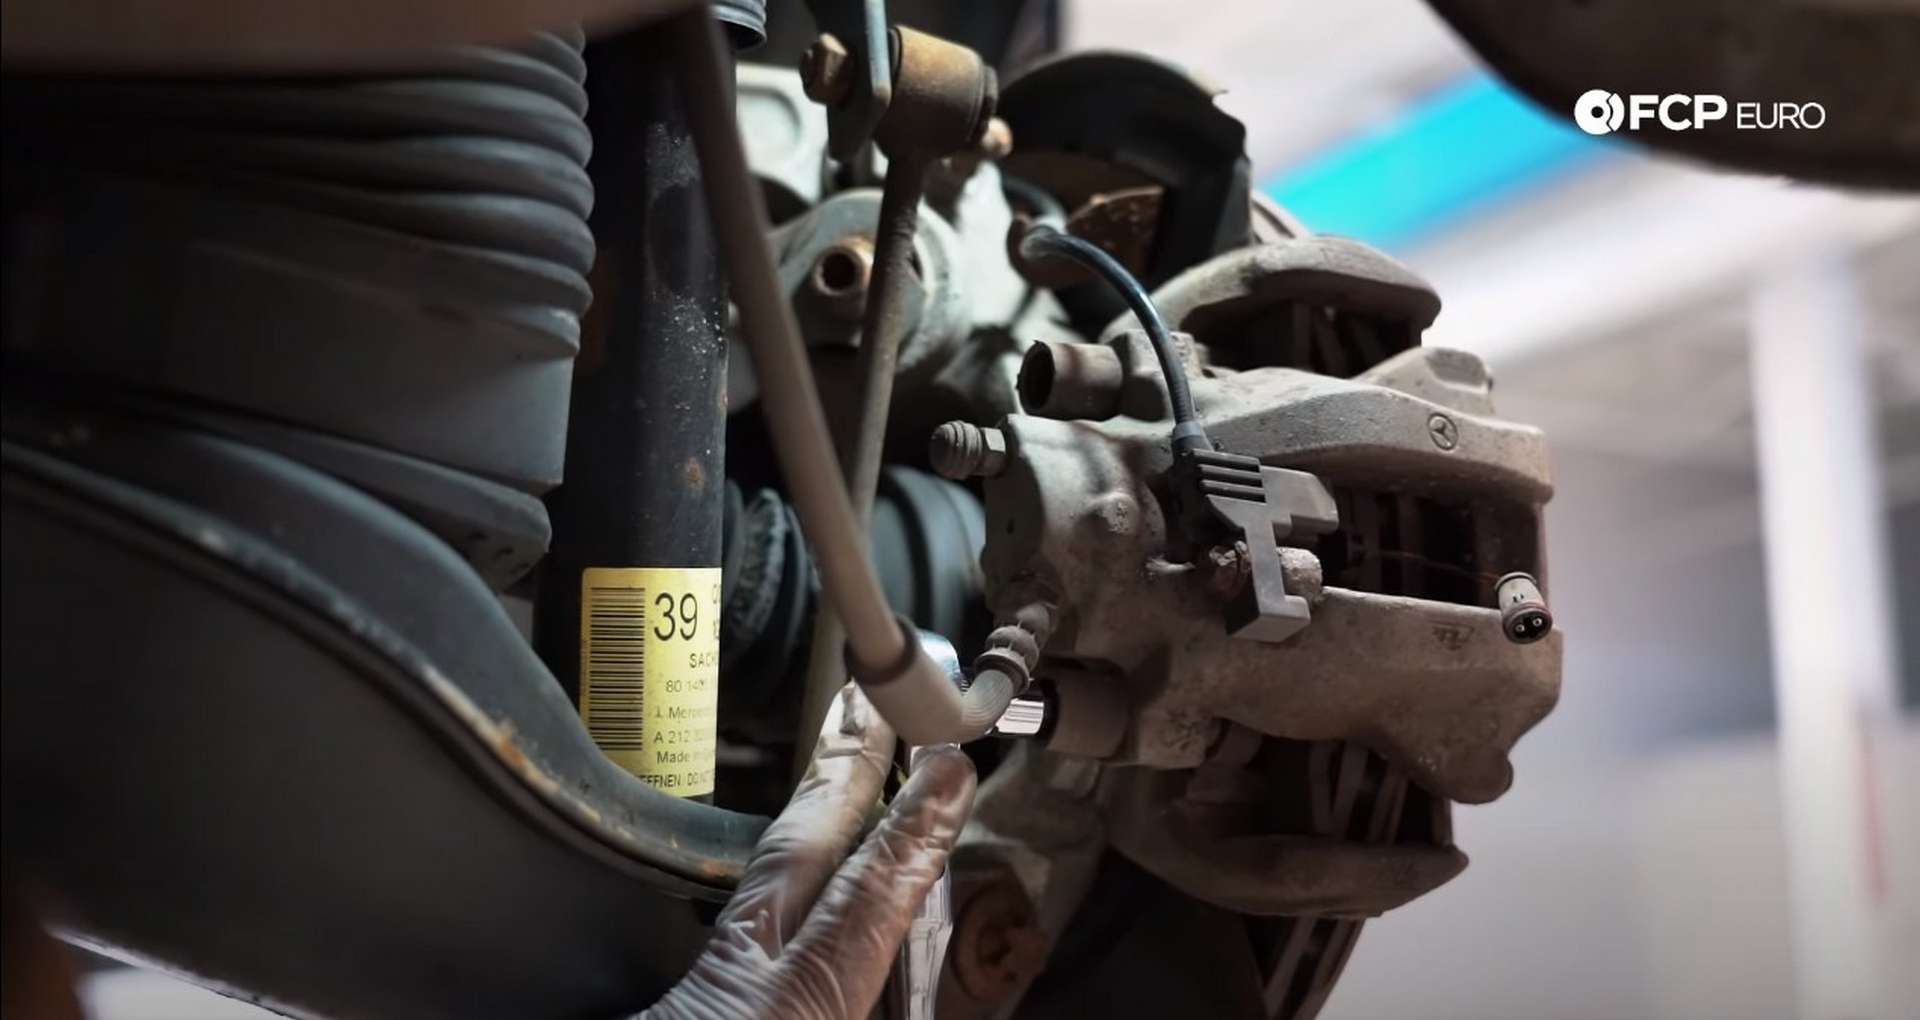 DIY Mercedes W211/212 Rear Brake Job removing the caliper guide pins